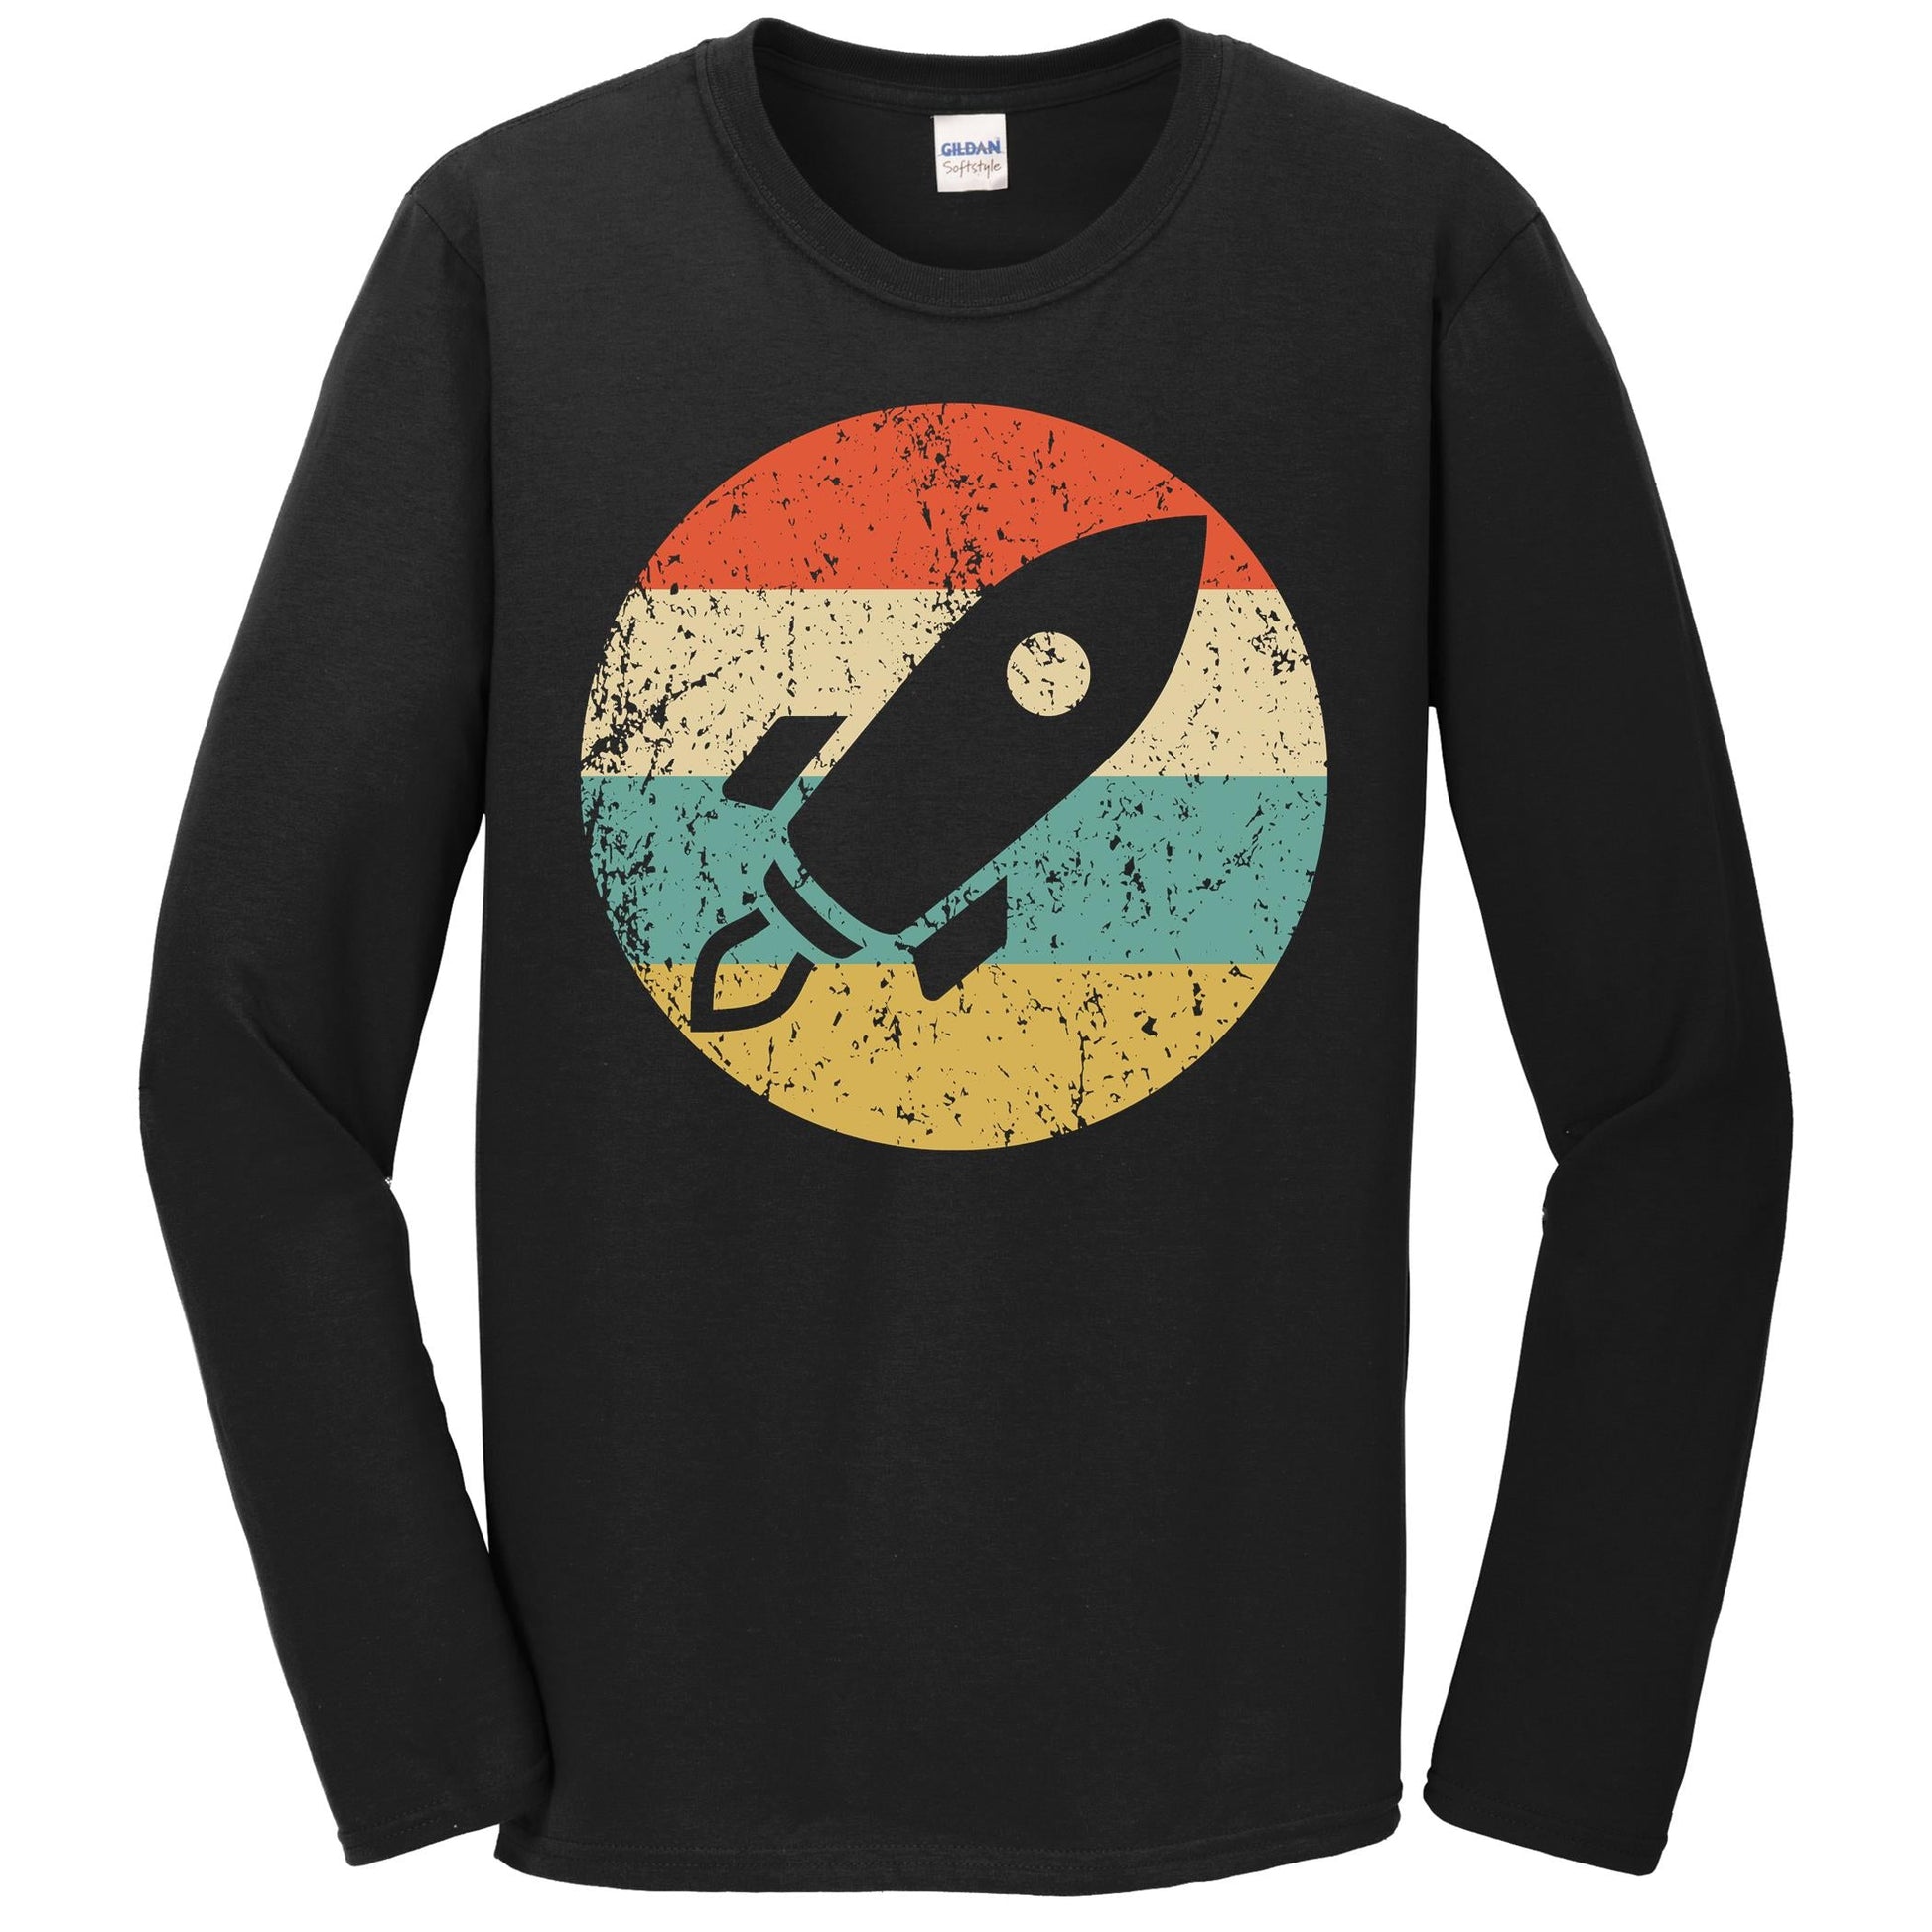 Astronaut Shirt - Vintage Retro Space Ship Long Sleeve T-Shirt